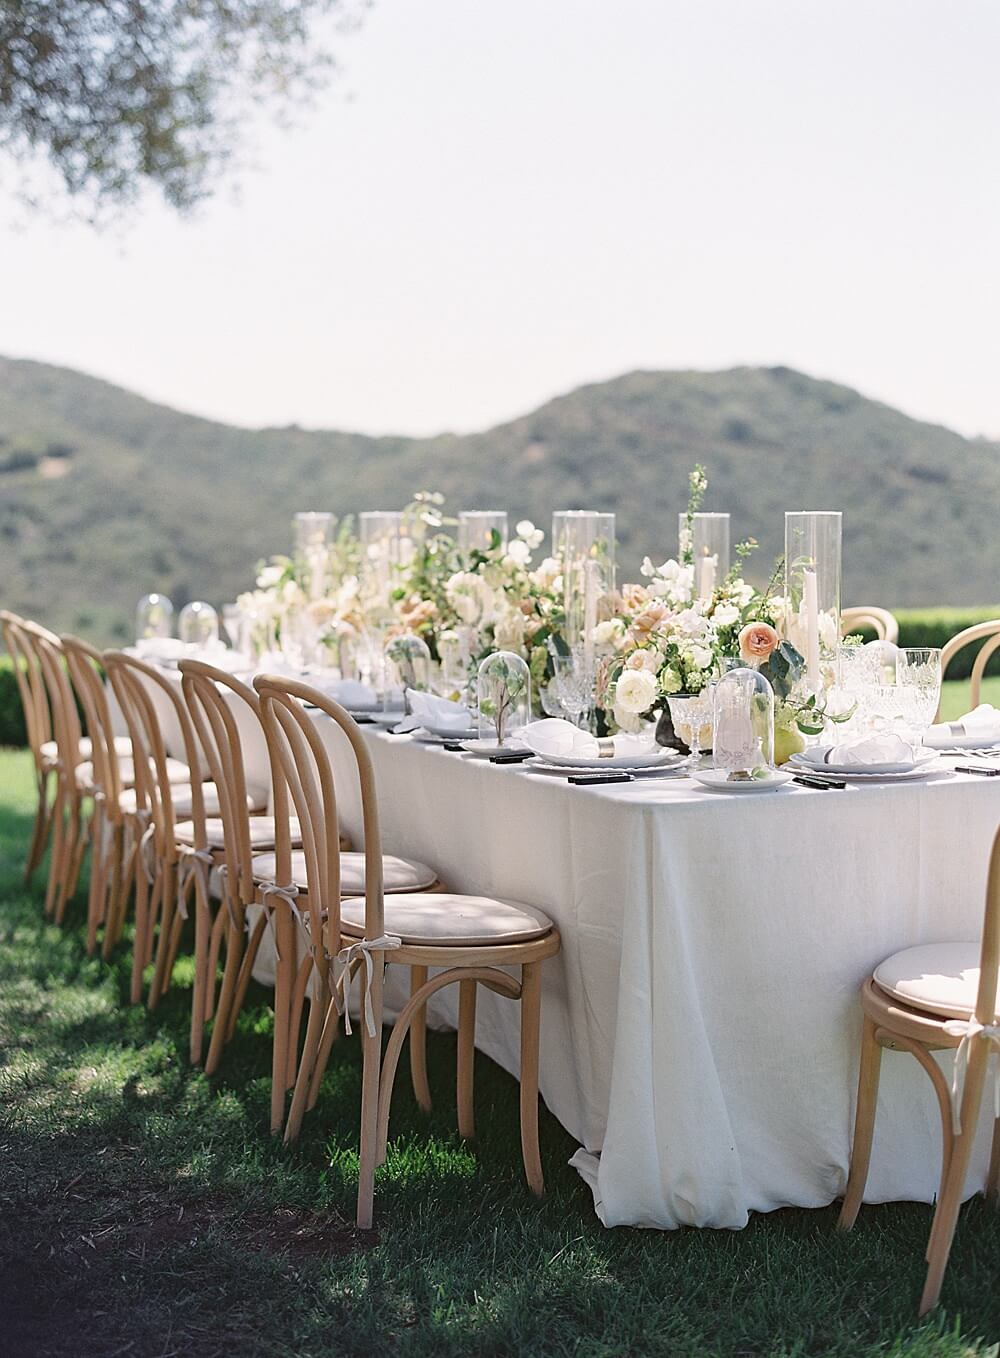 Al fresco outdoor wedding reception with cream peach pear and light wood tabletop at Cal-a-vie - Jacqueline Benét Photography